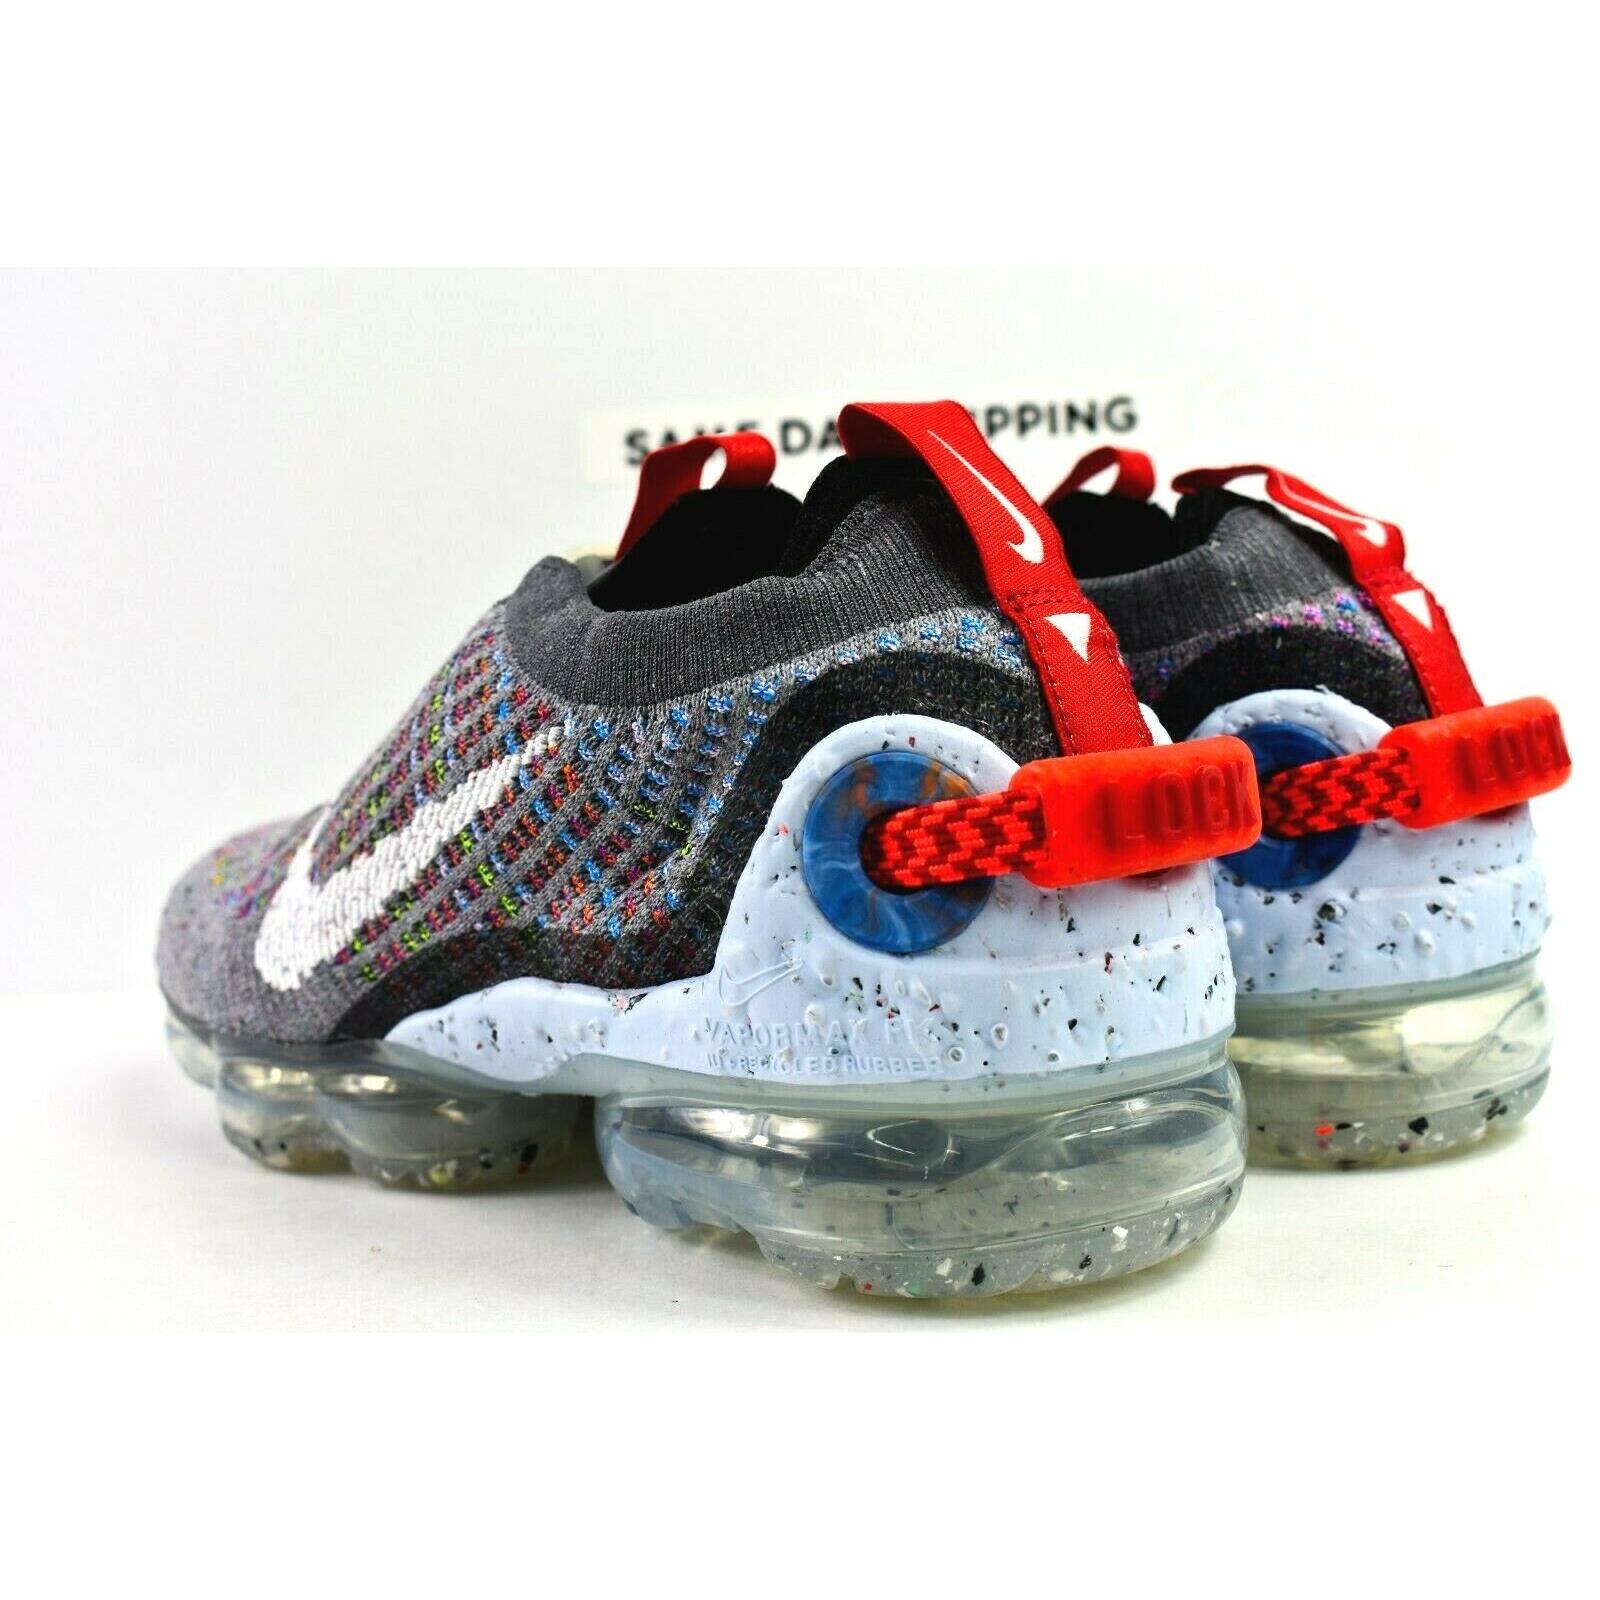 Nike shoes Air Vapormax - Multicolor 2